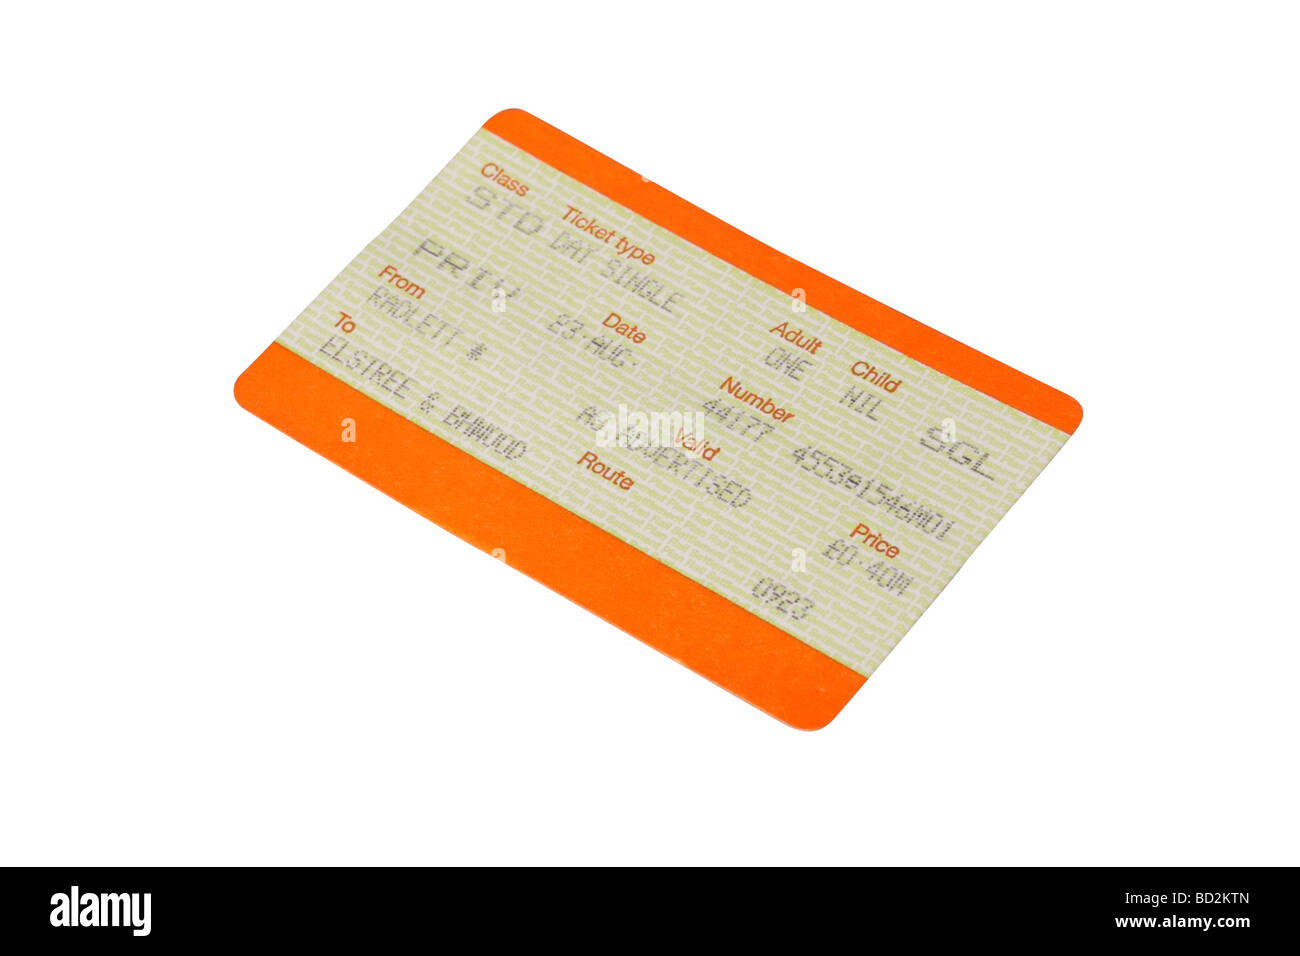 British rail train ticket Stock Photo